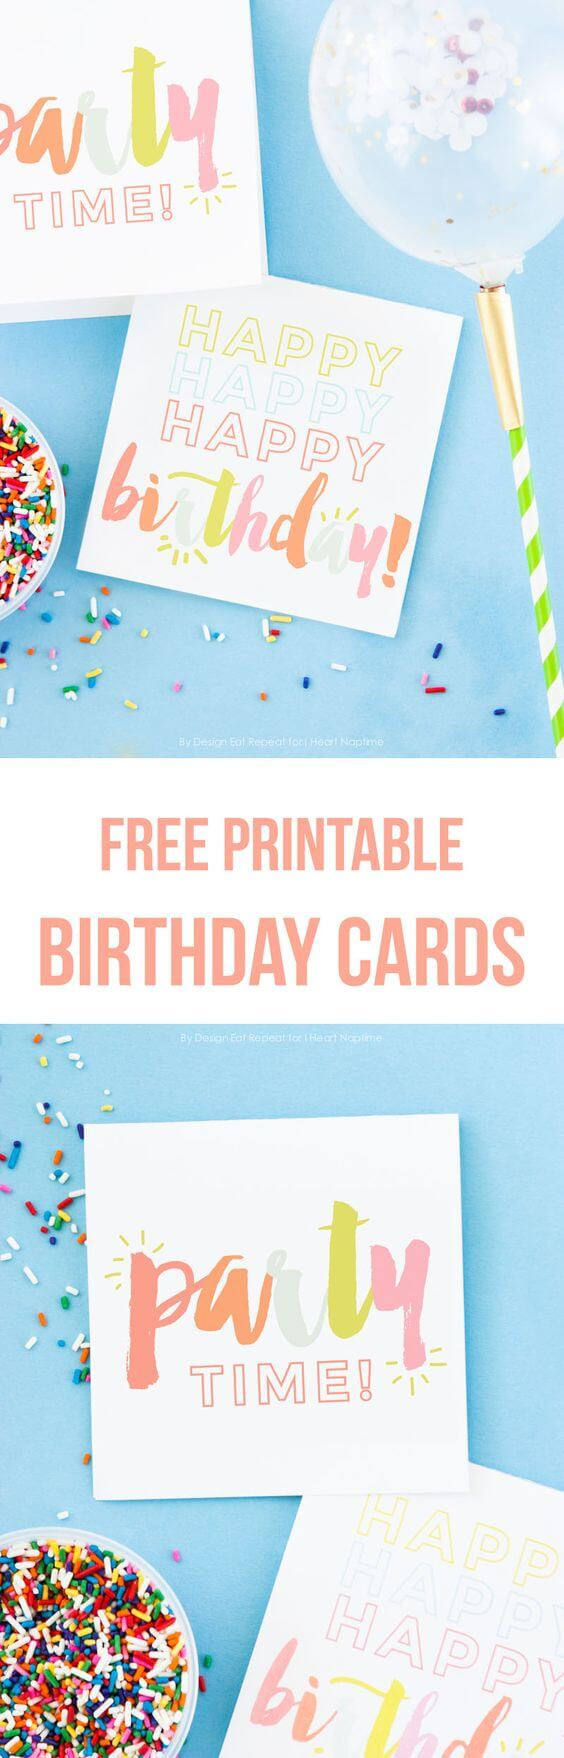 Free Printable Birthday Cards
 Adorable FREE printable birthday cards I Heart Naptime